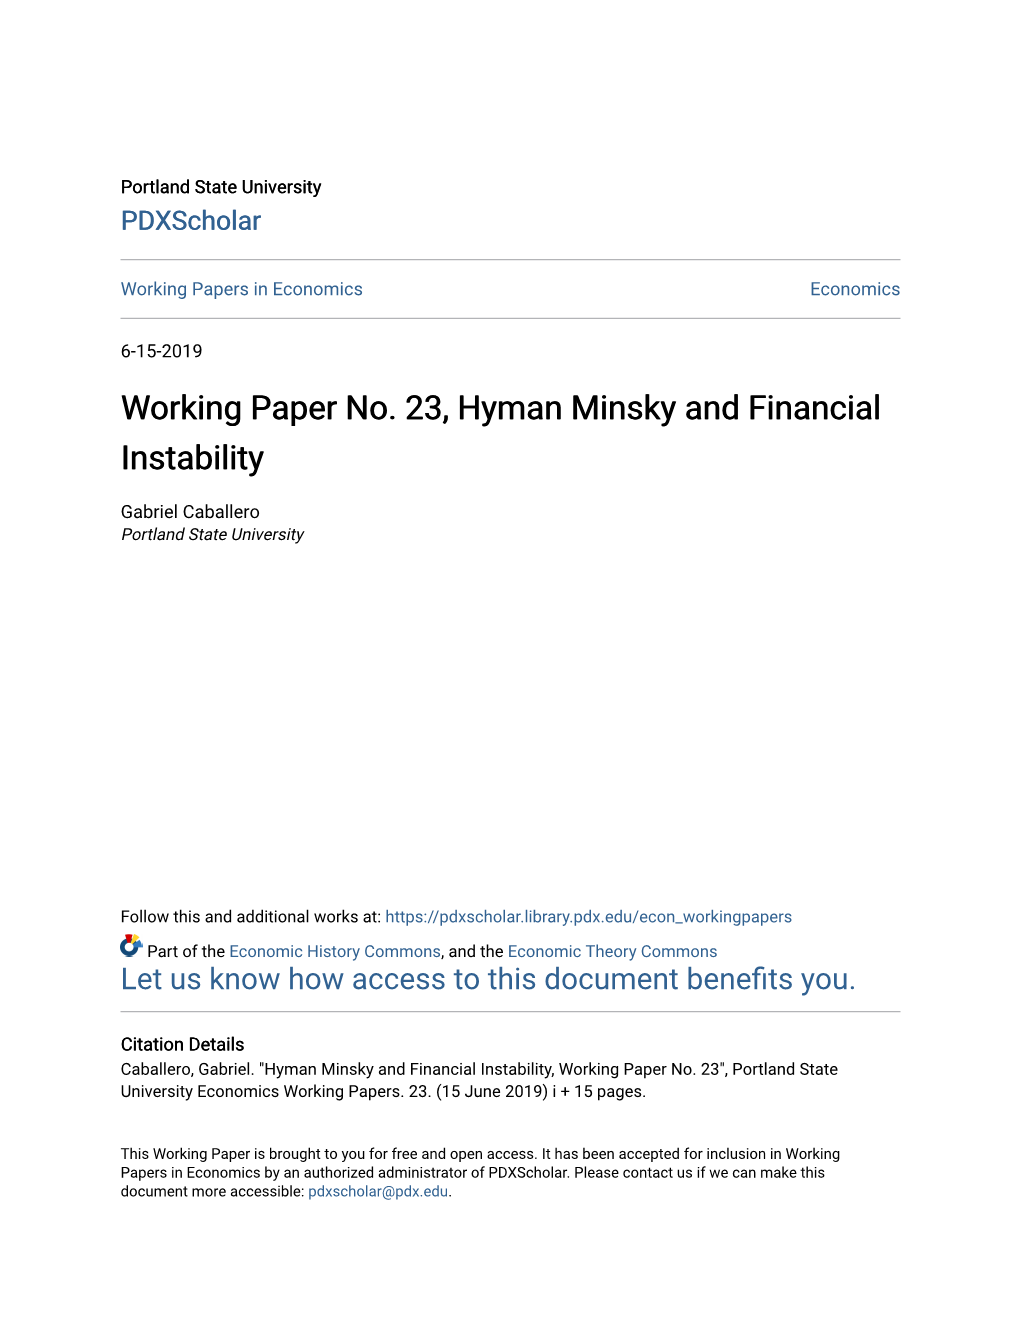 Working Paper No. 23, Hyman Minsky and Financial Instability